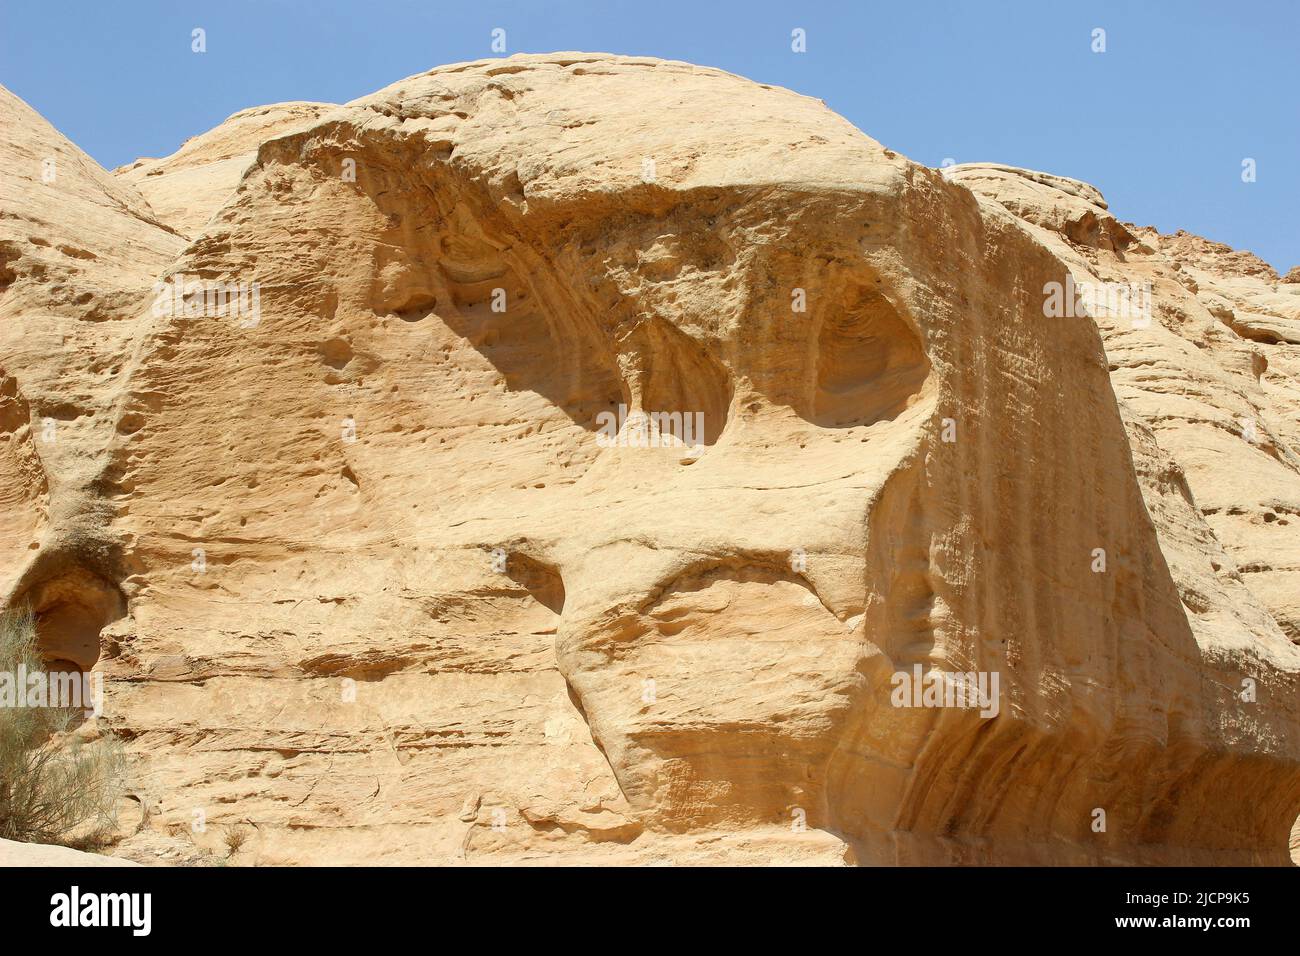 Piedra arenisca erosionada en forma de calavera, Petra Jordan Foto de stock